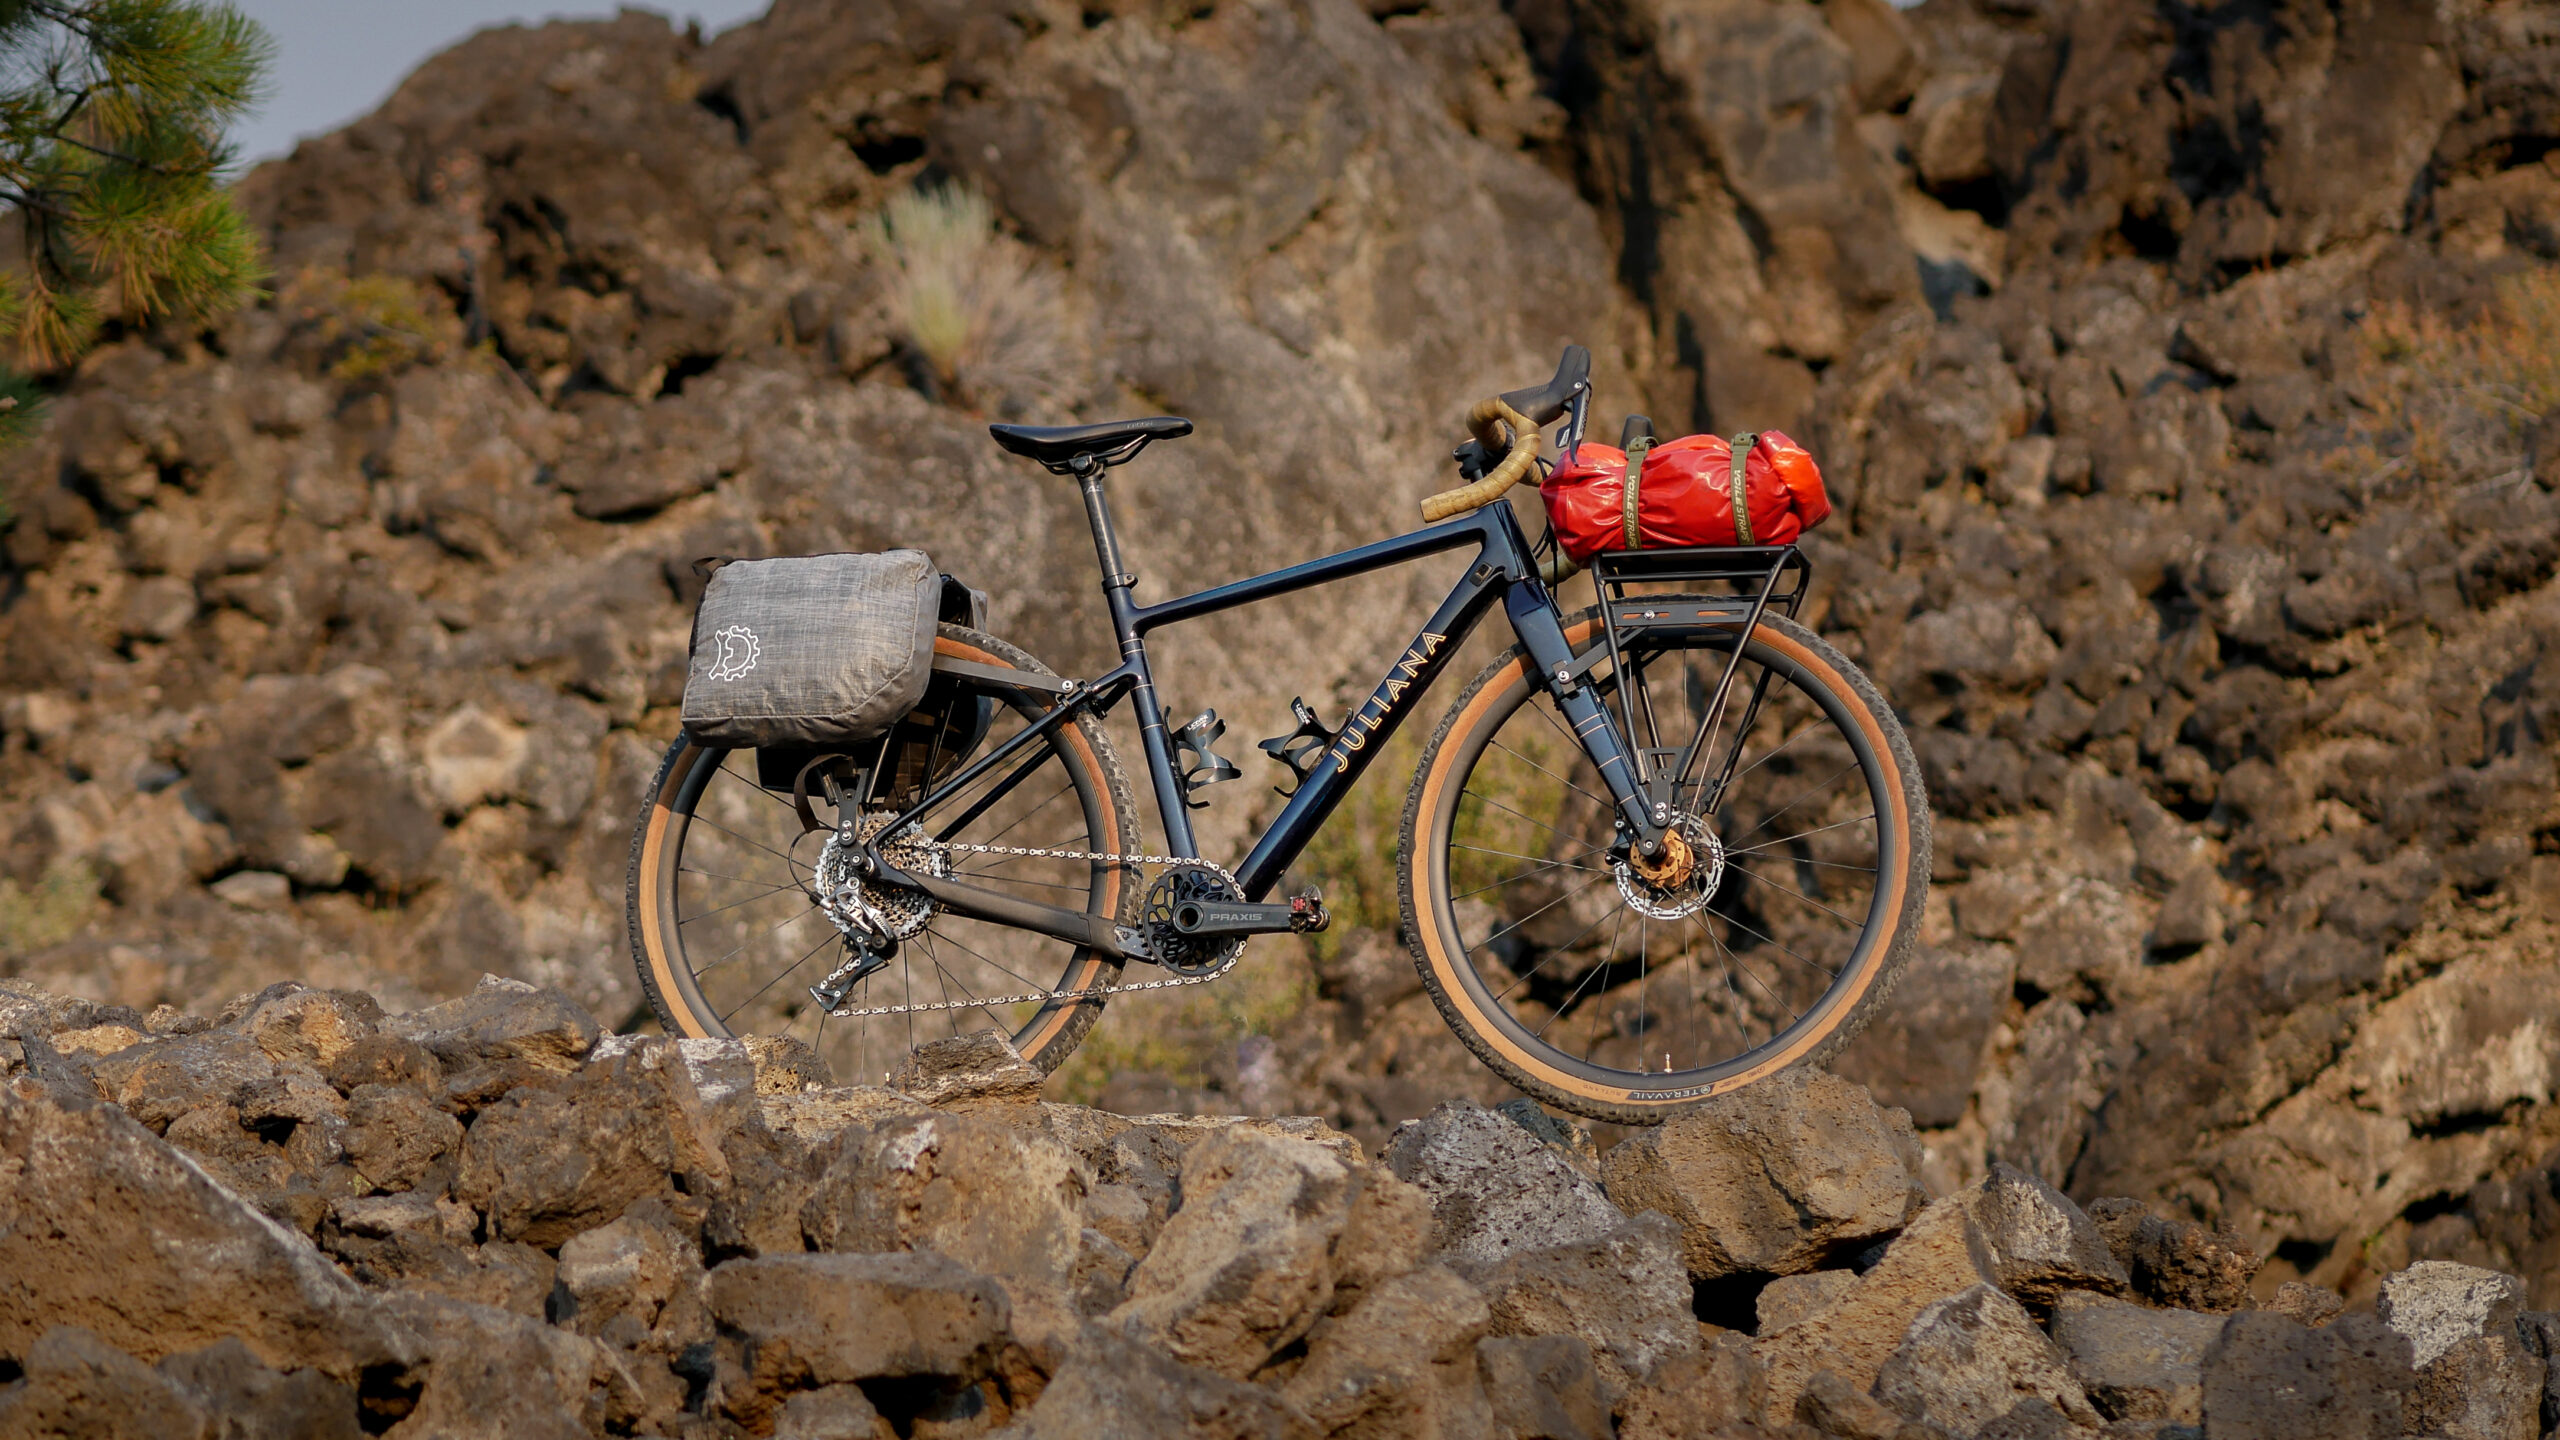 Drive cargo racks on a gravel bike